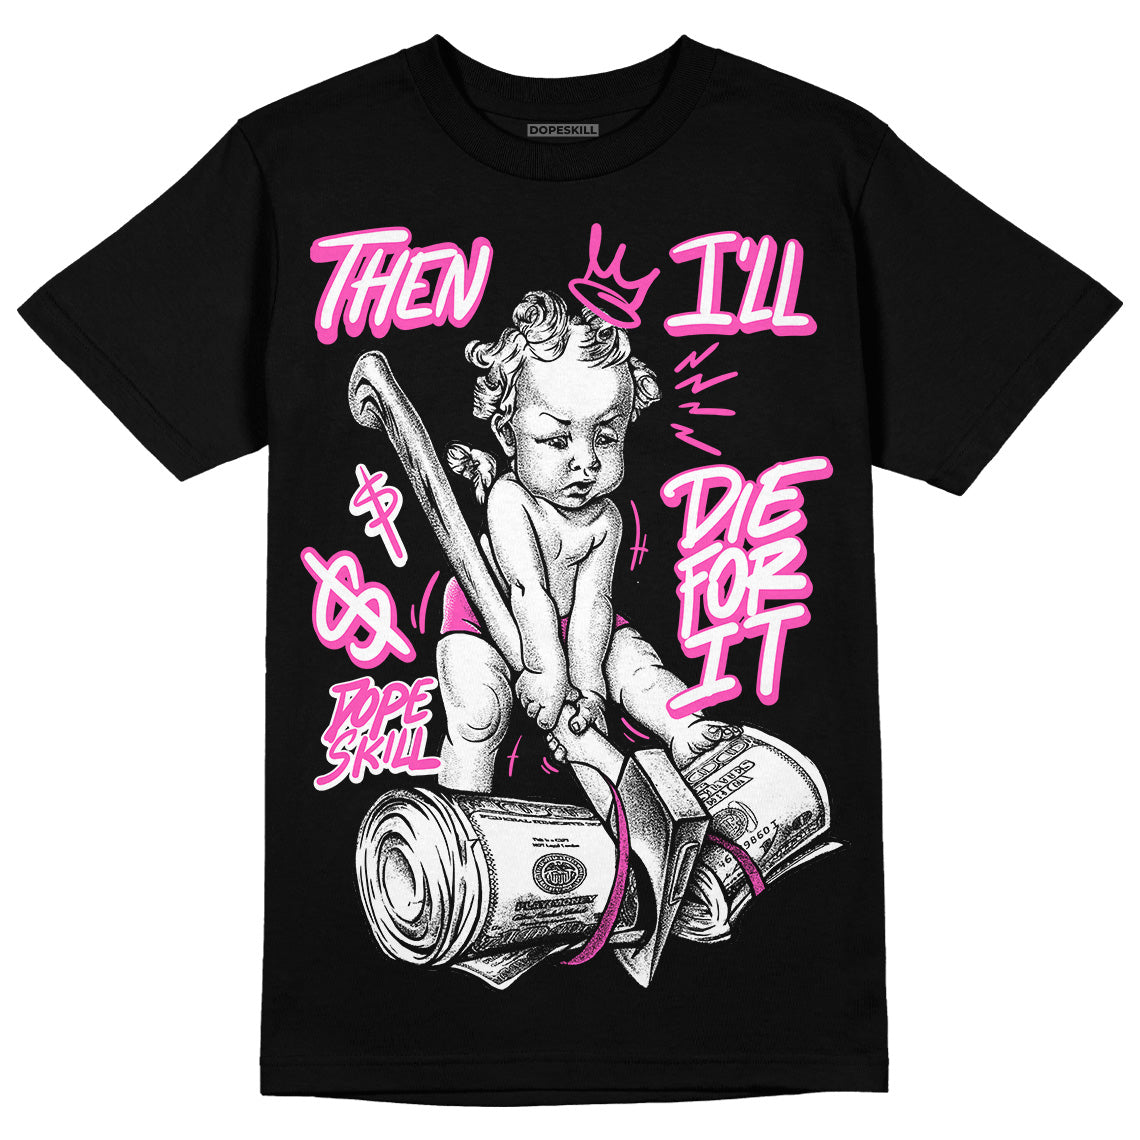 Jordan 4 GS “Hyper Violet” DopeSkill T-Shirt Then I'll Die For It Graphic Streetwear - Black